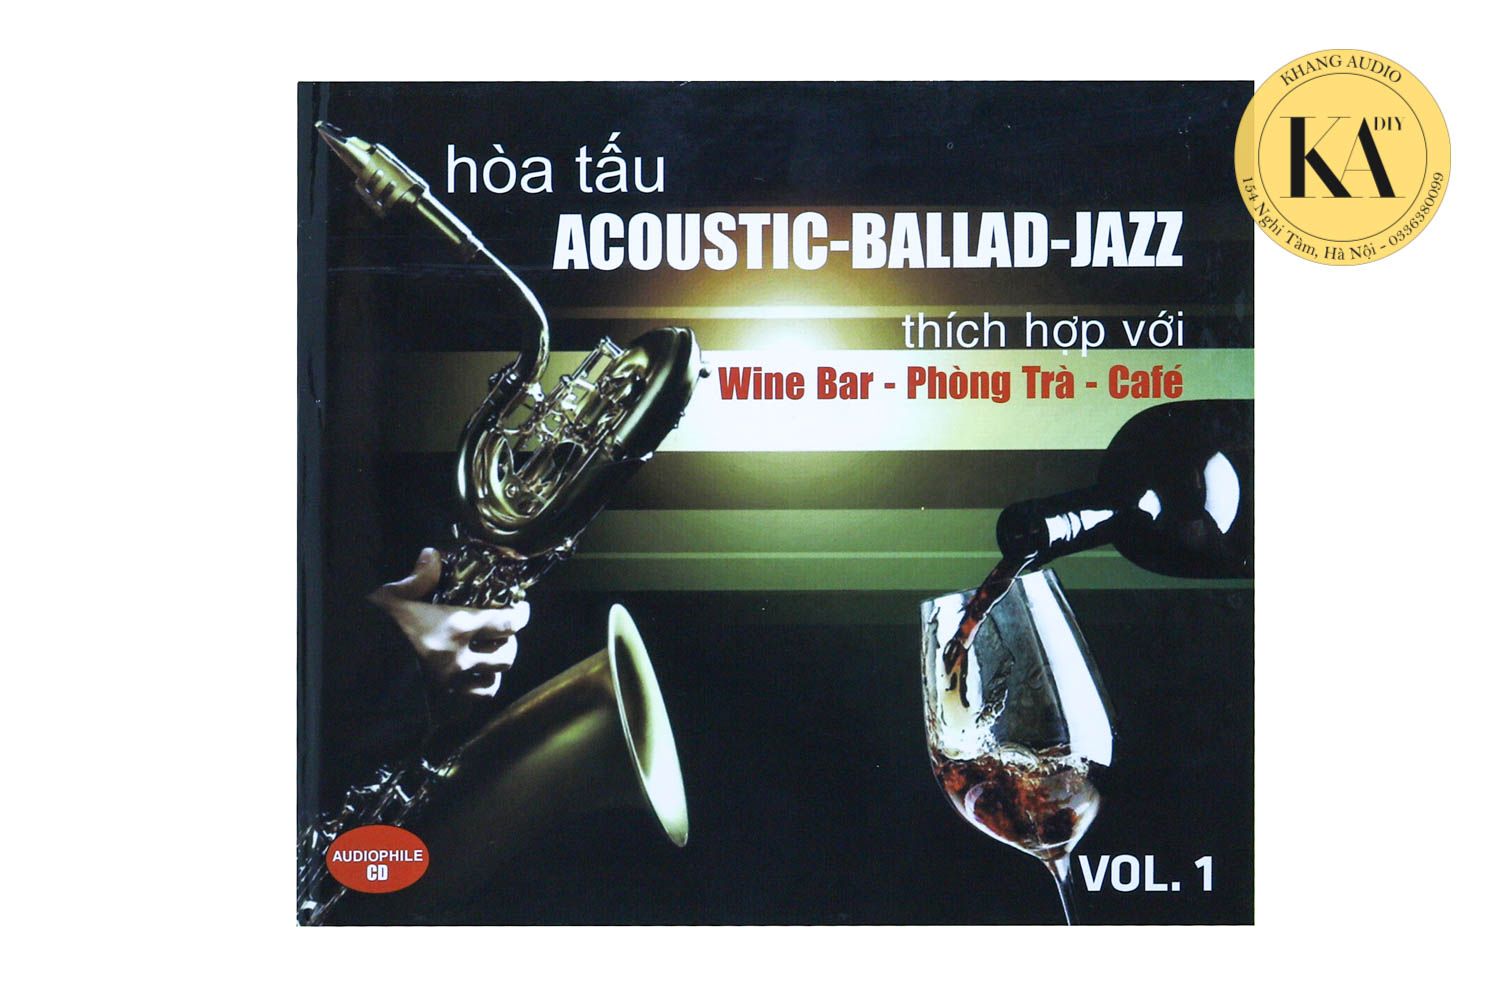 Hoà Tấu Acoustic - Ballad - Jazz Vol. 1